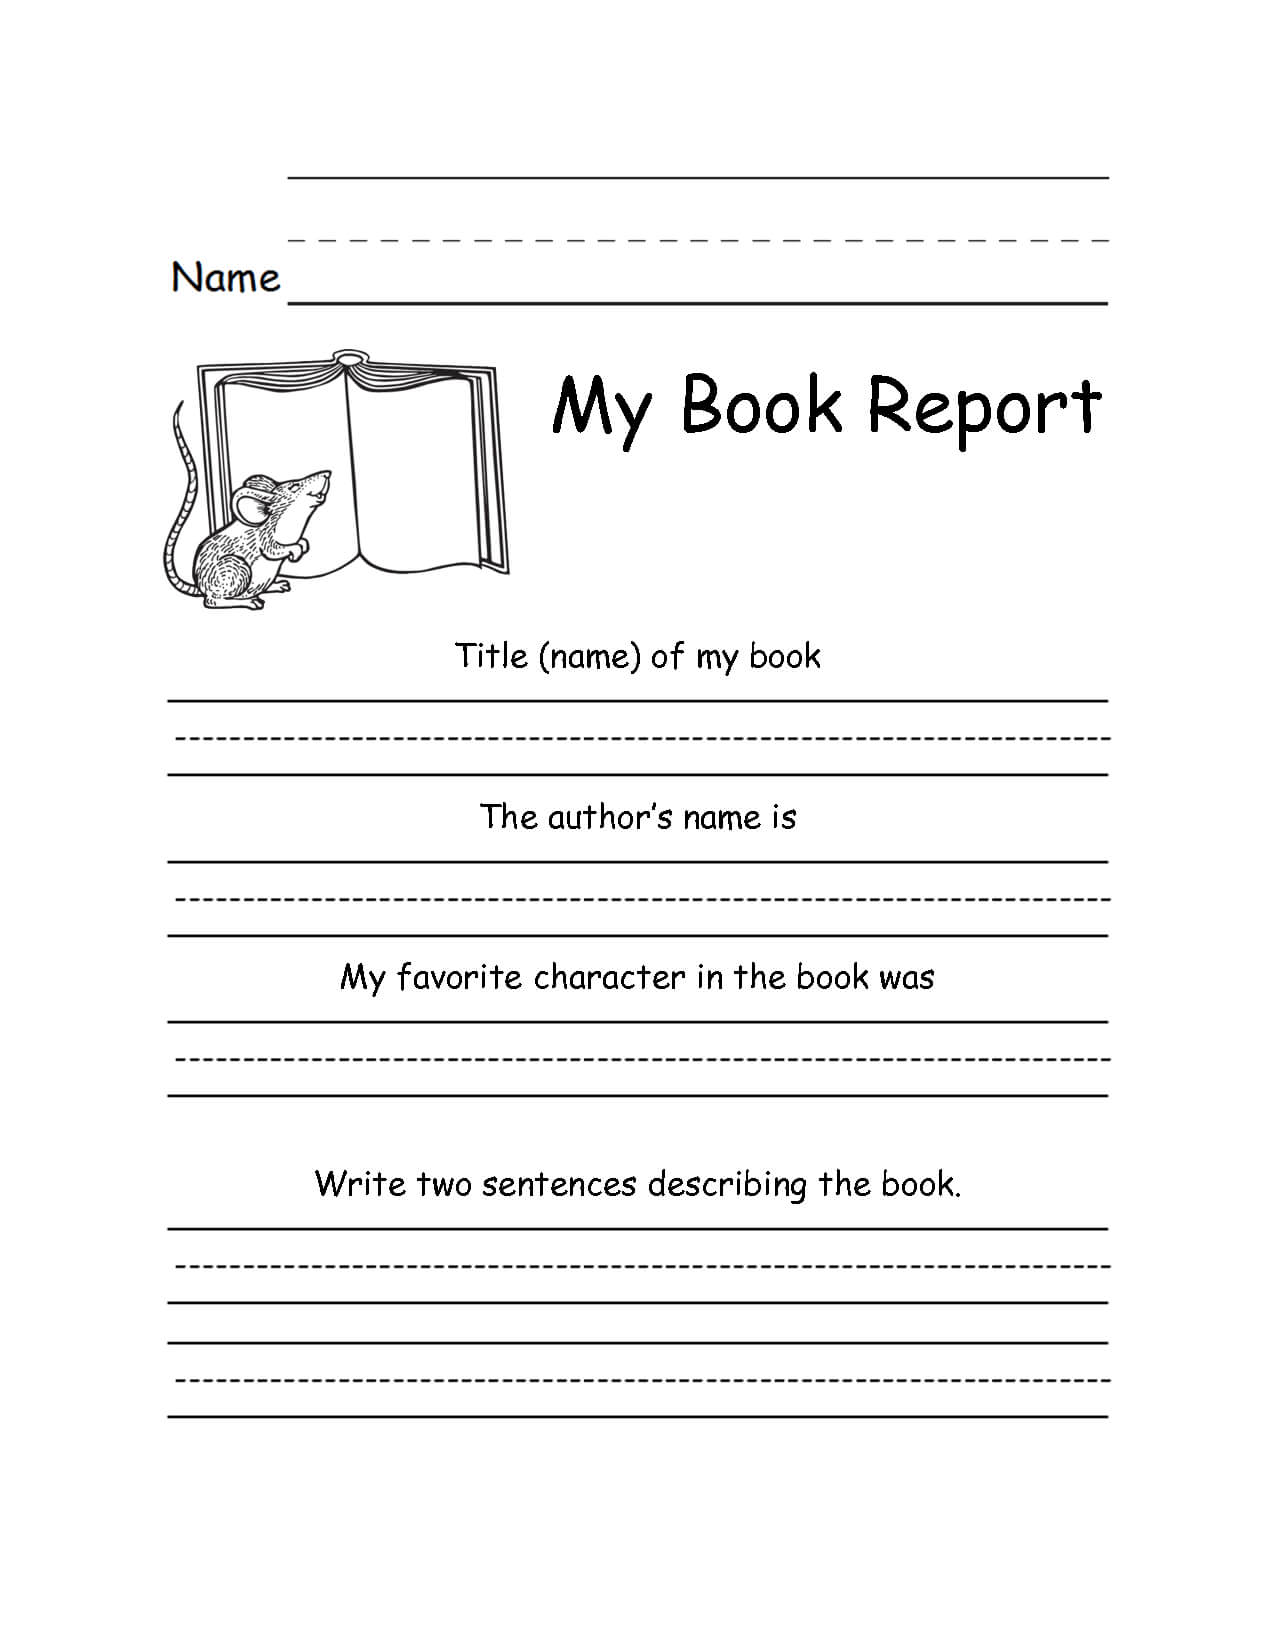 3rd-grade-book-report-template-sampletemplatess-sampletemplatess